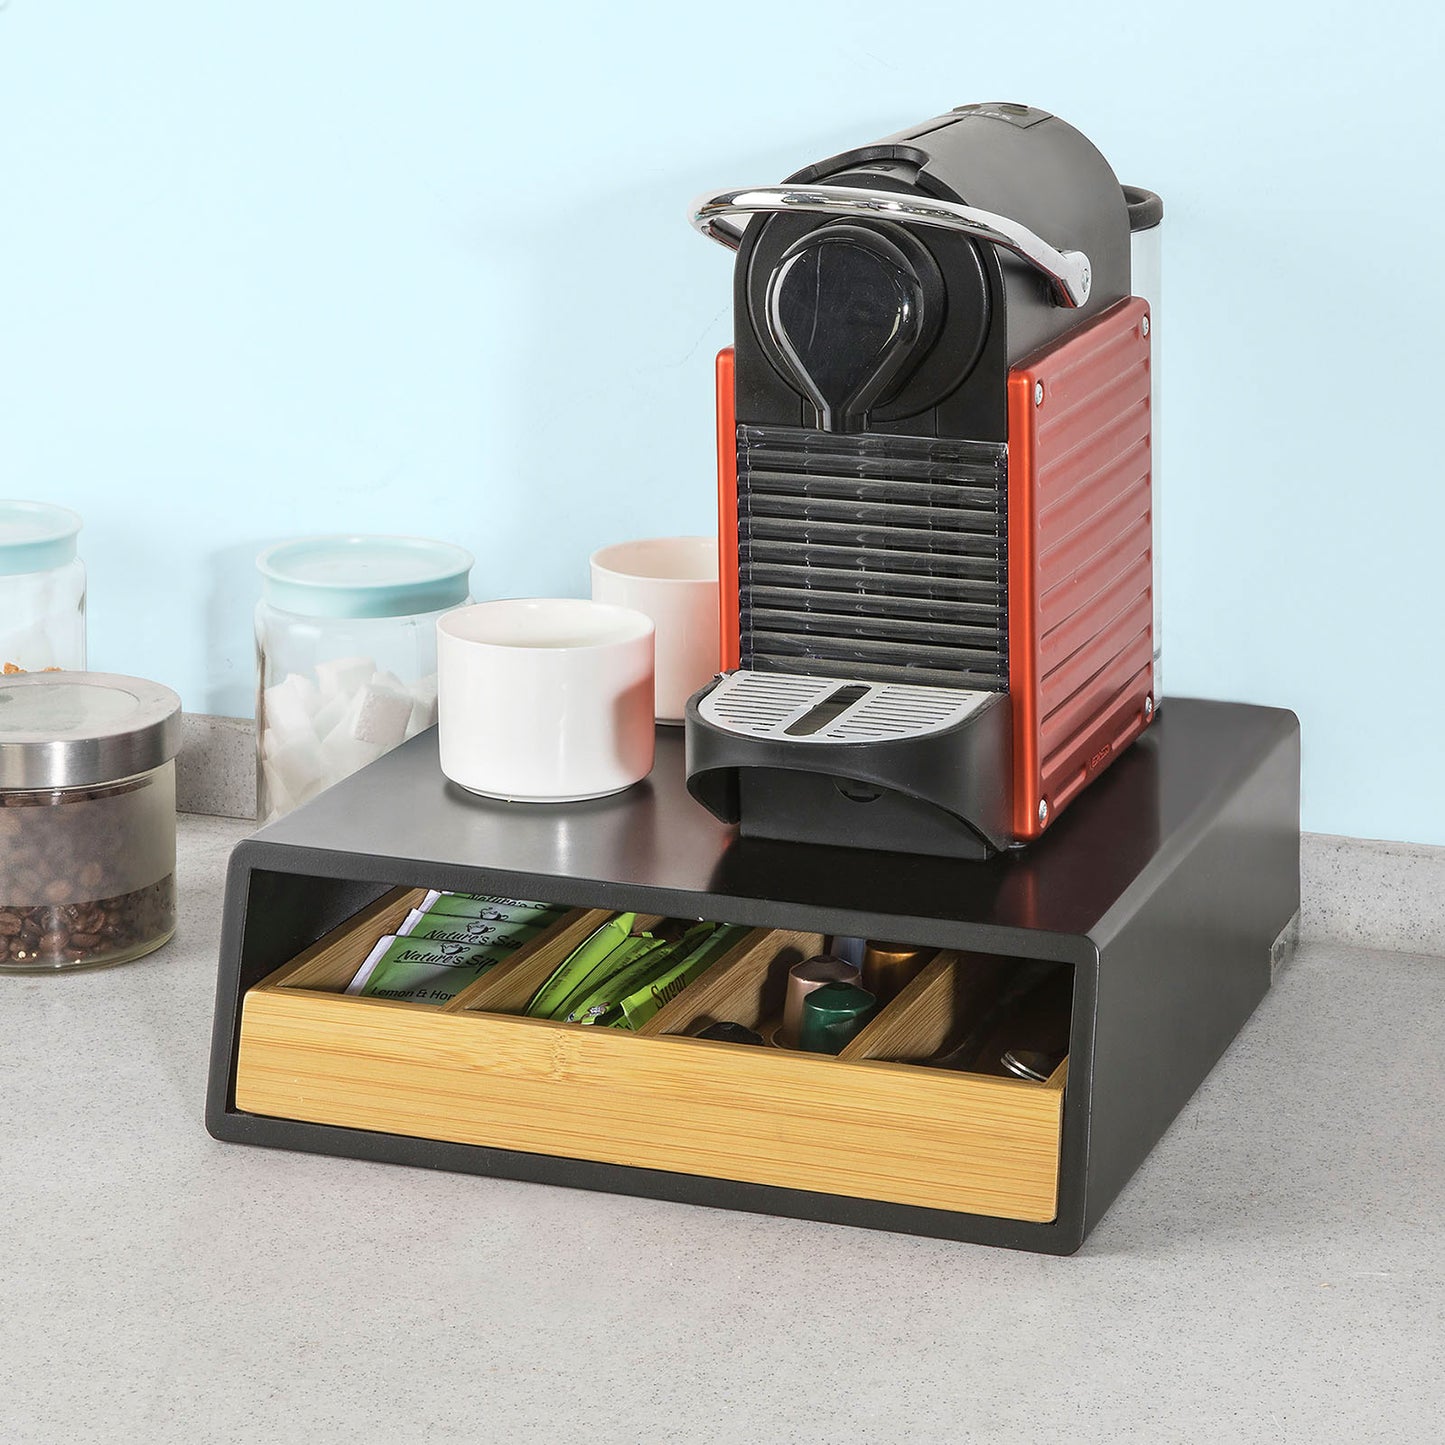 SoBuy Coffee Pod Capsule Teabags Drawer Box Holder, Coffee Machine Stand,Desk Organiser